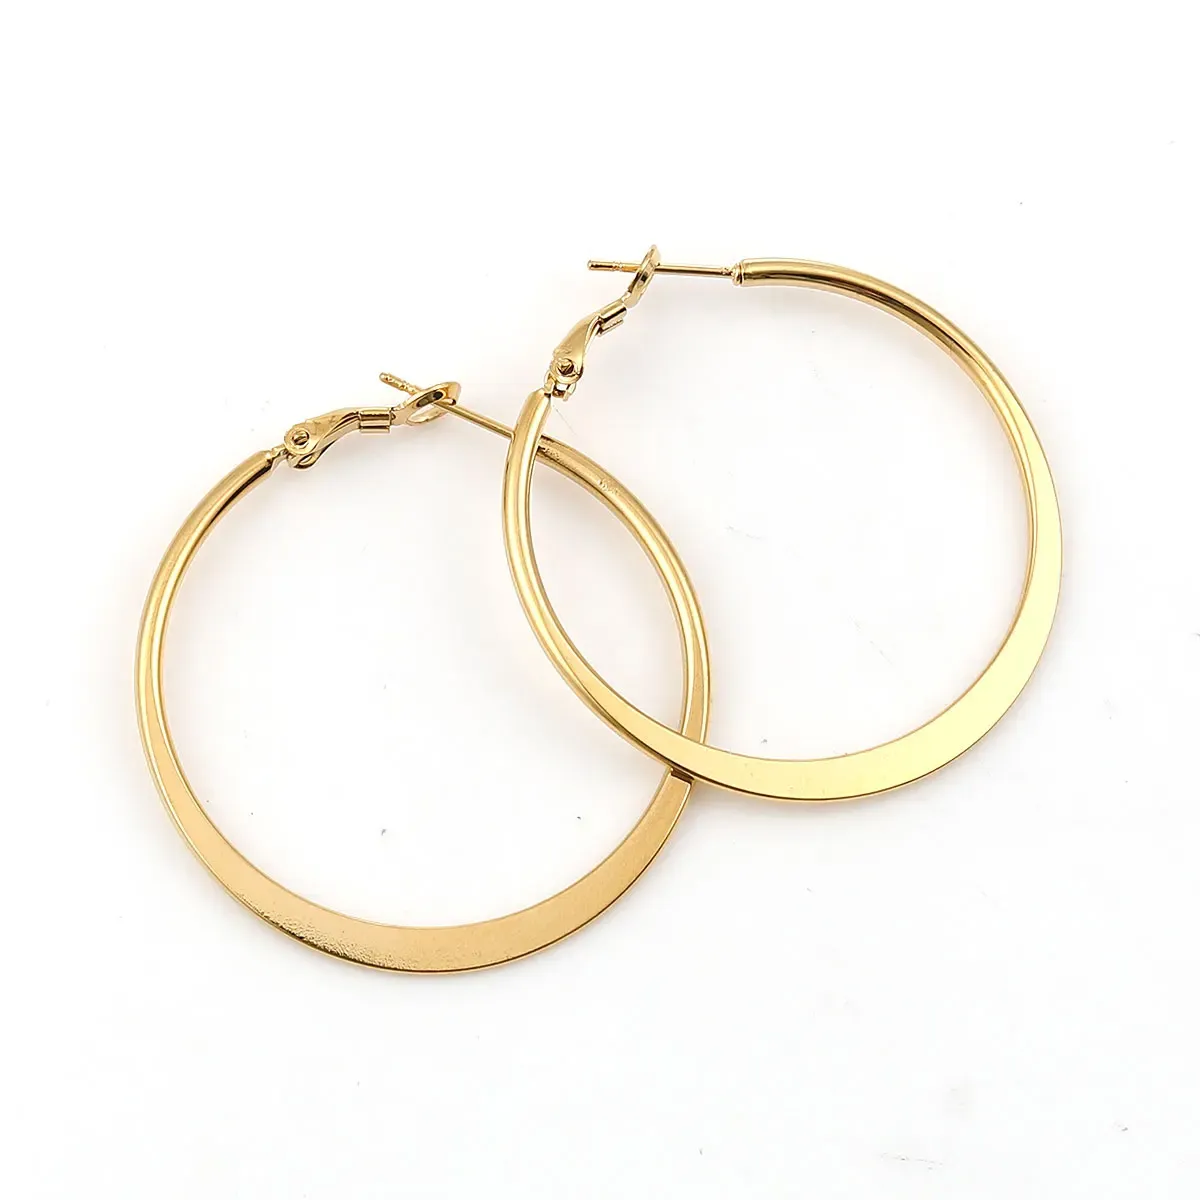 Earrings 1 Pair 316 Stainless Steel Circle Hoop Earrings Gold Color Round Earrings For Women Ladies Fashion Trendy Ear Jewelry 40mm Dia.